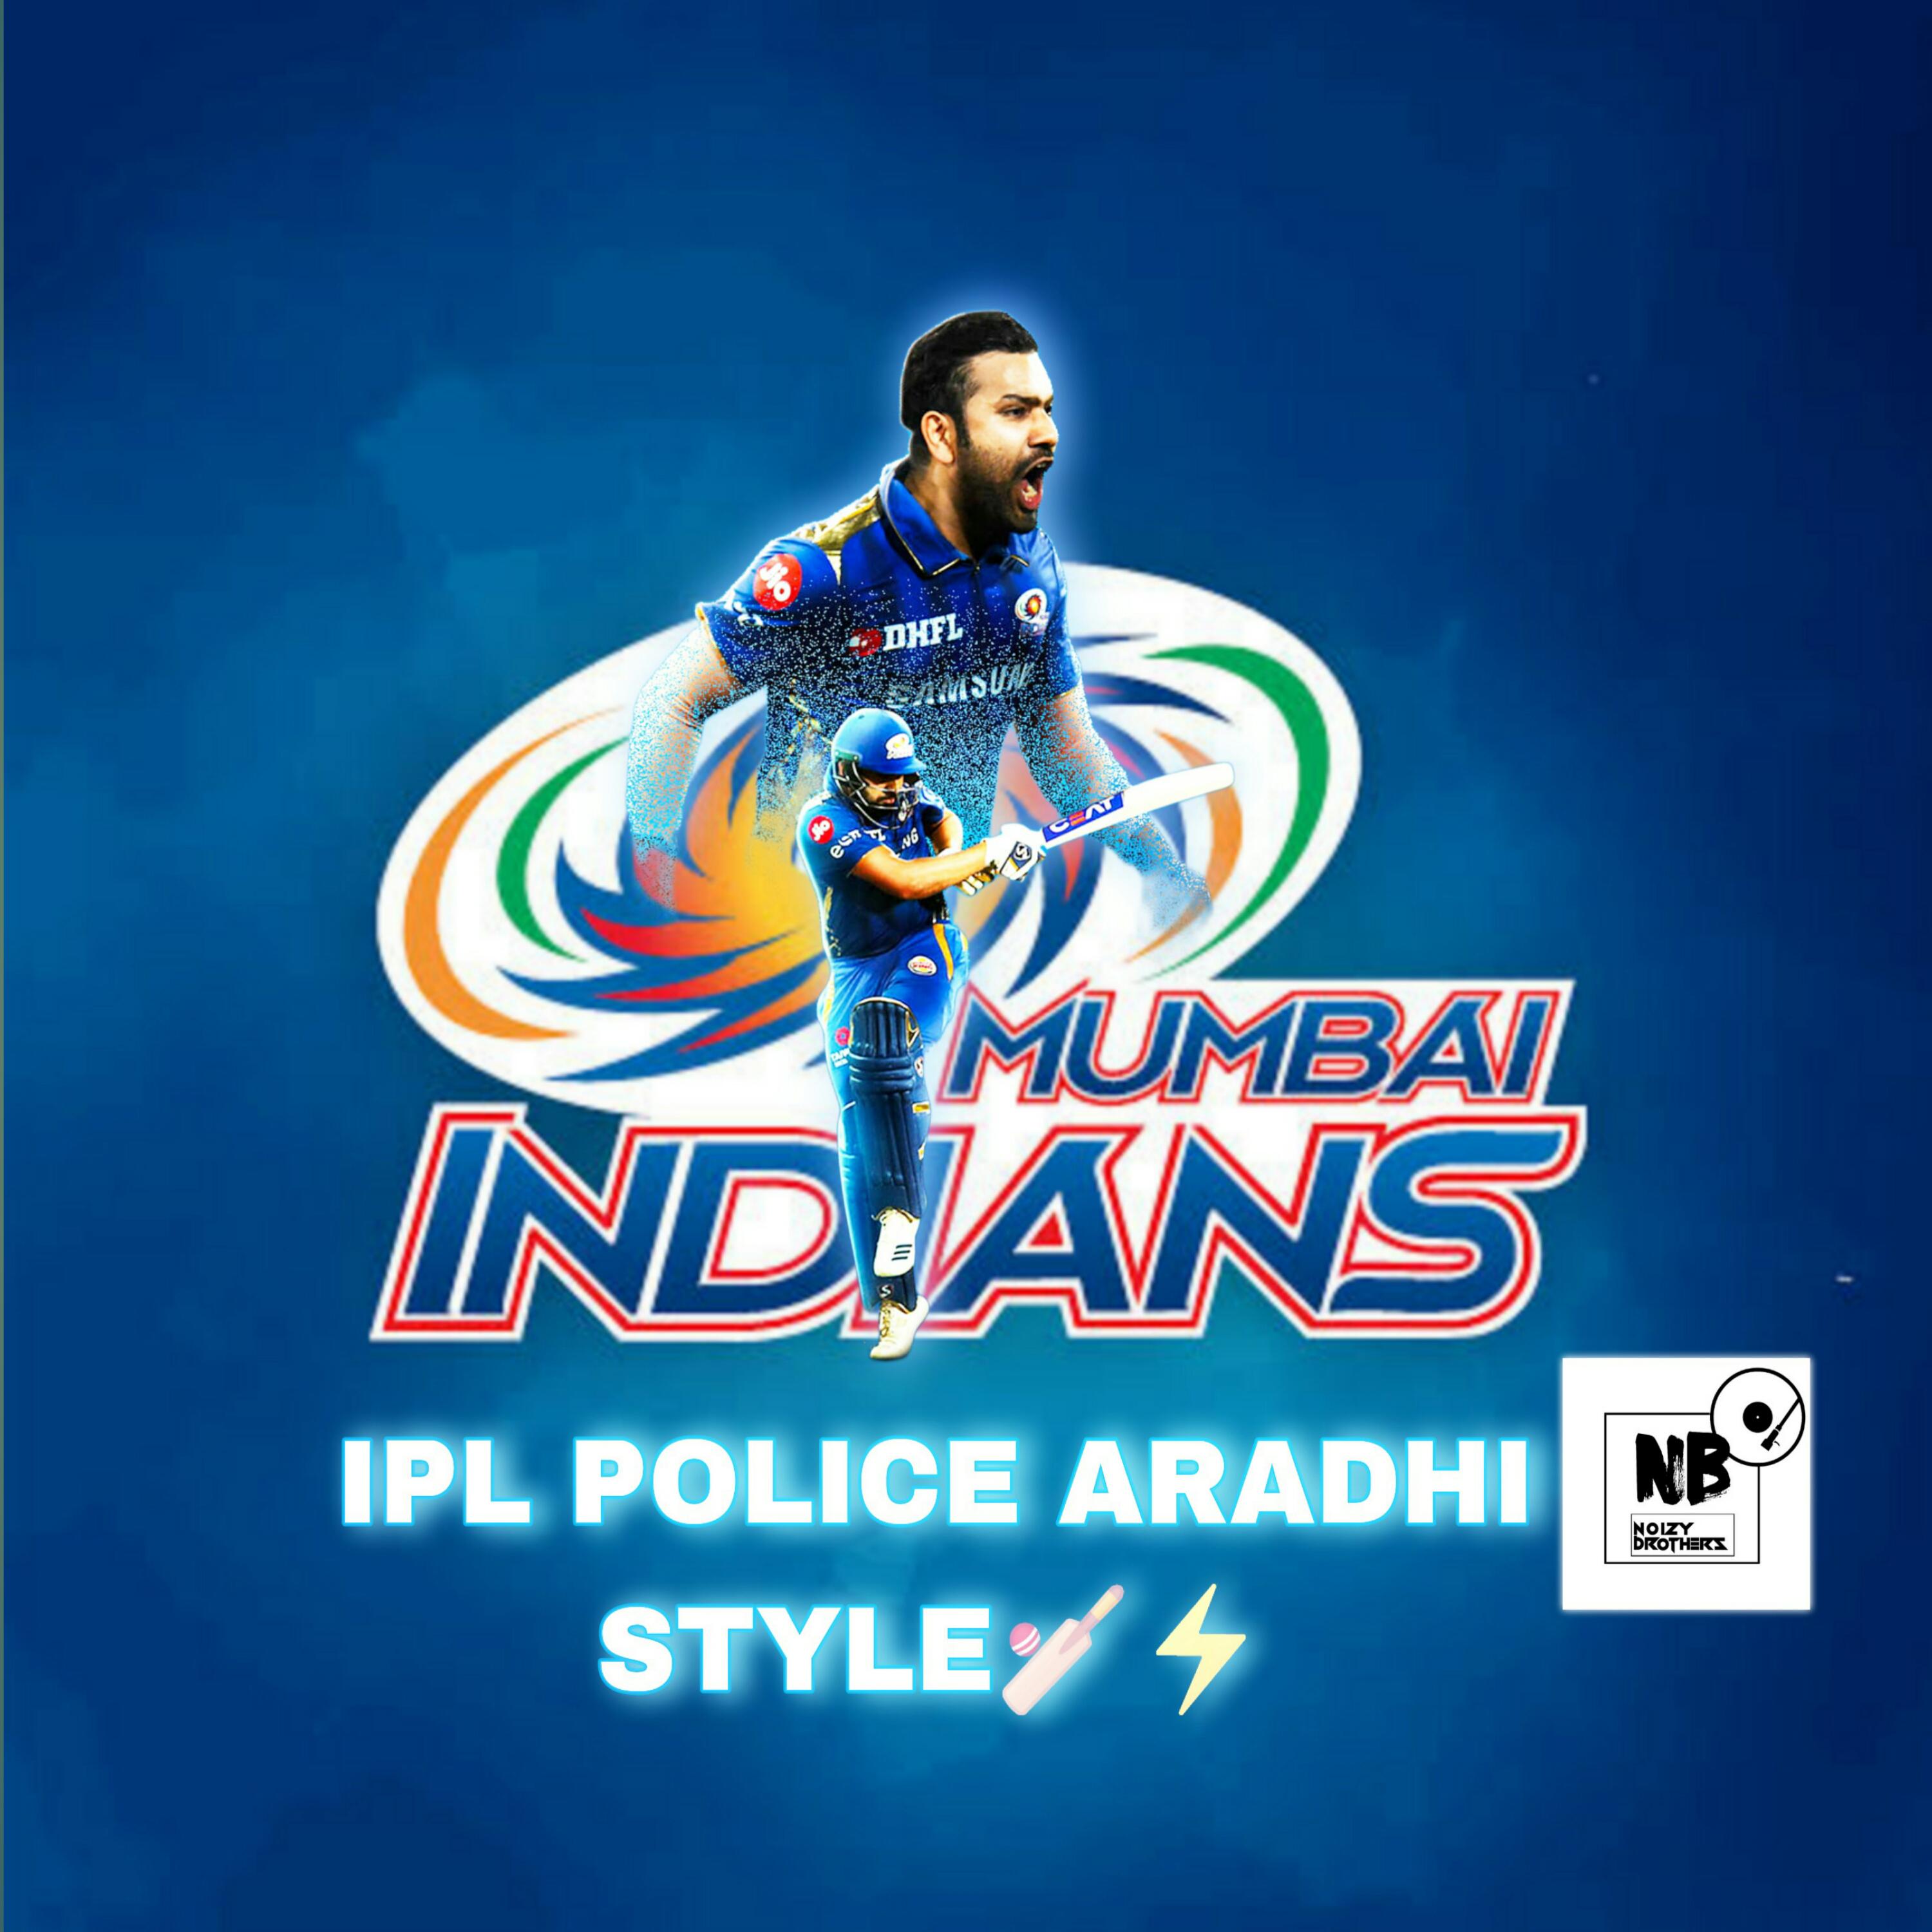 Постер альбома Mumbai Indians (MI Fans) IPL Circuit Aradhi Style